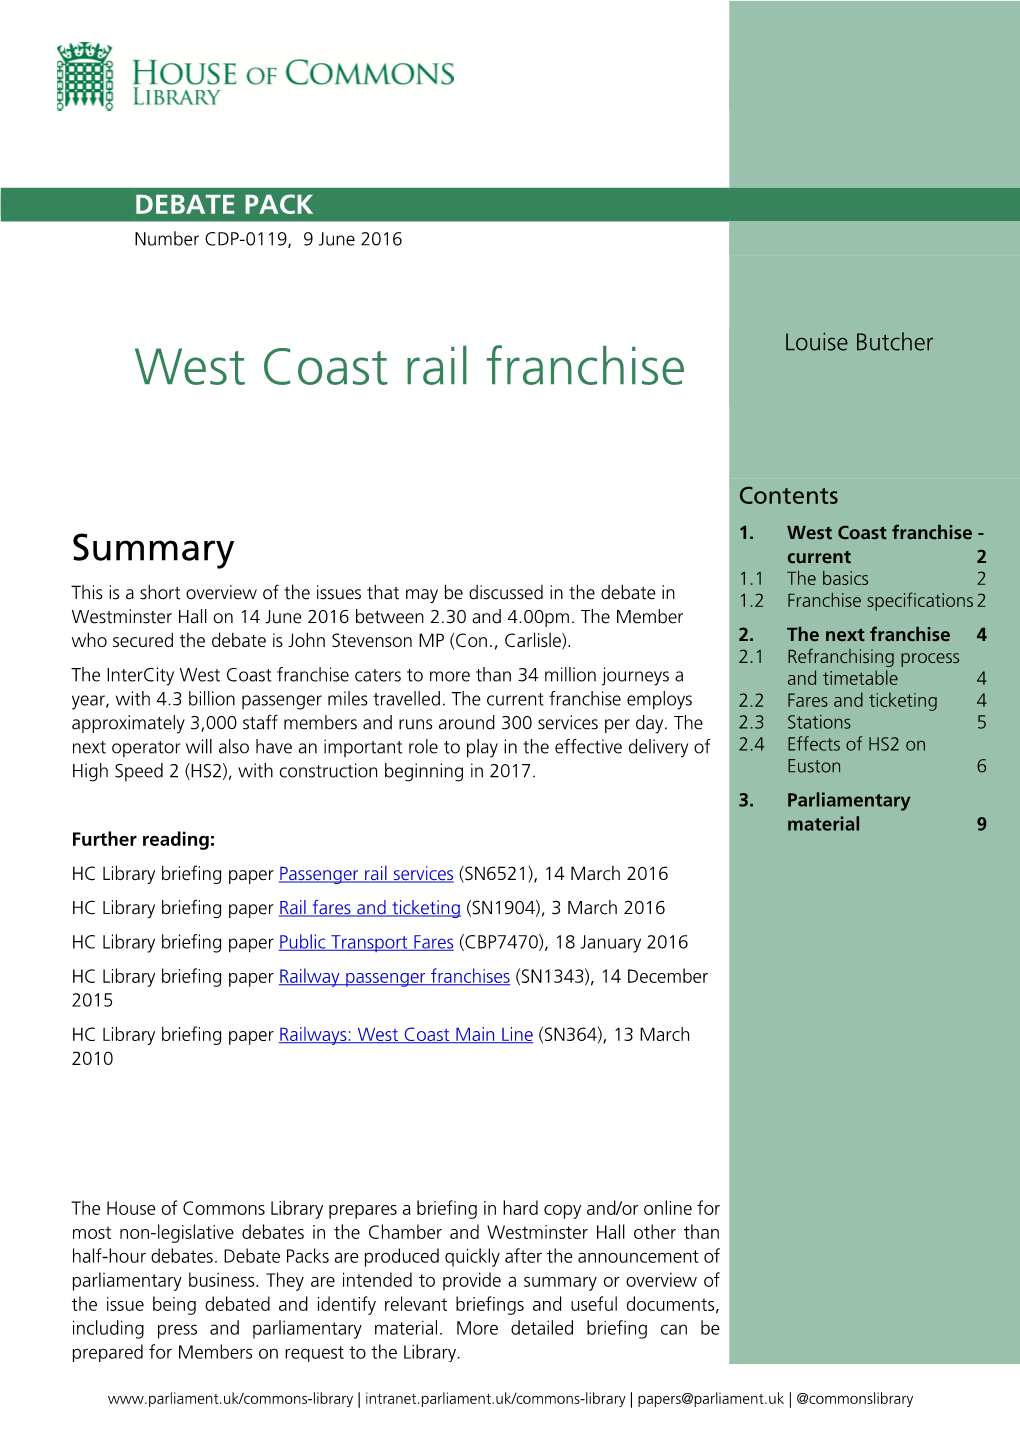 West Coast Rail Franchise